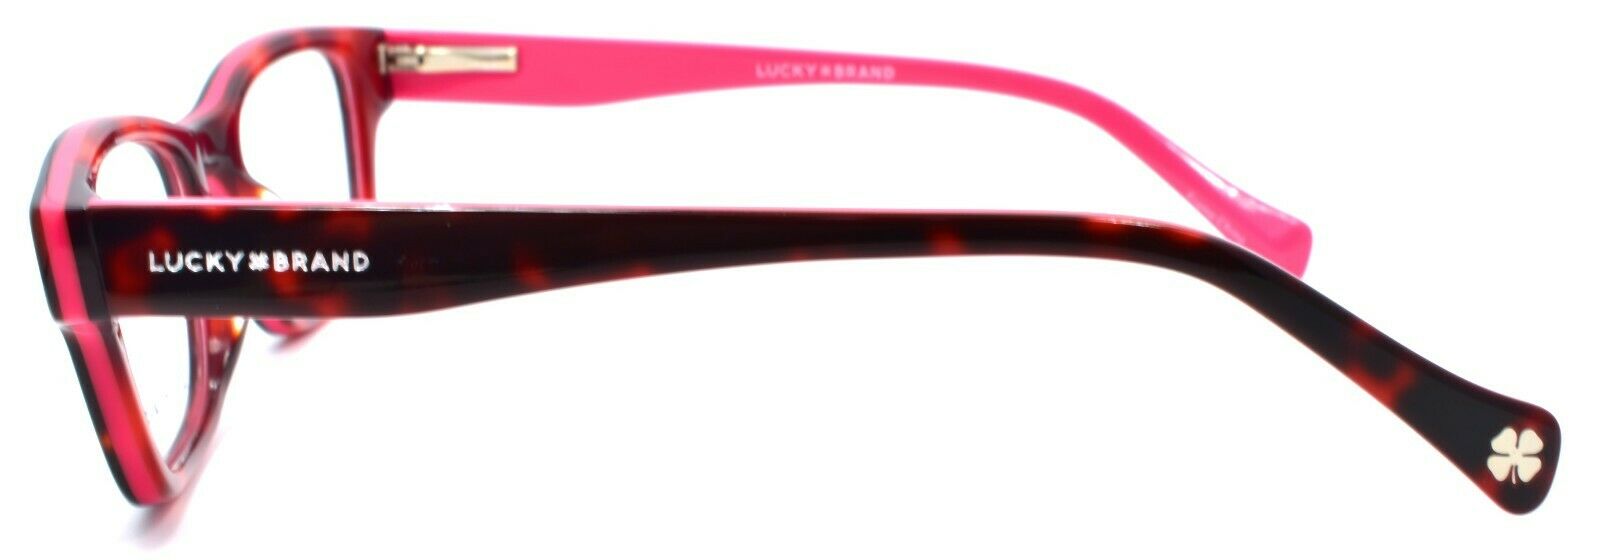 3-LUCKY BRAND D705 Kids Eyeglasses Frames 46-16-125 Pink Tortoise-751286295658-IKSpecs